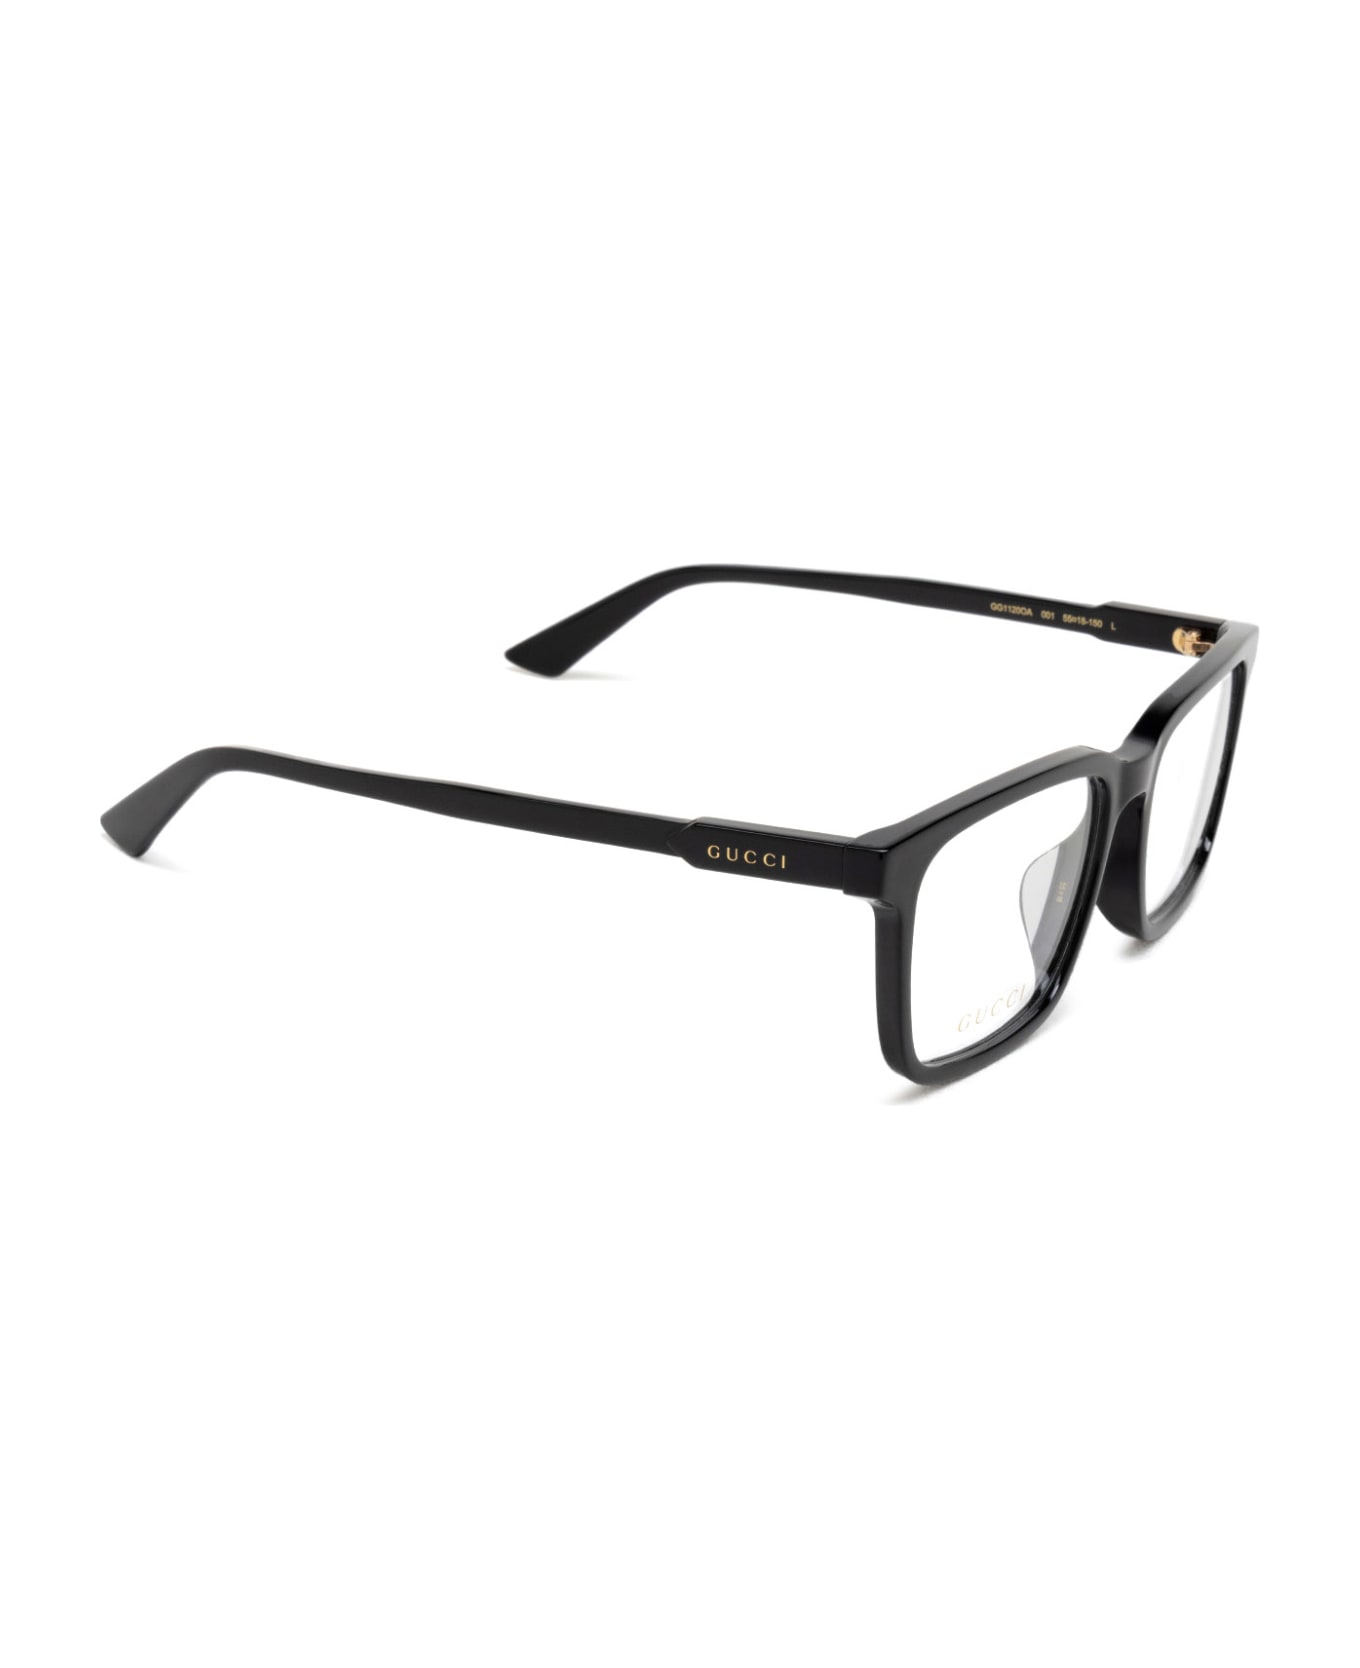 Gucci Eyewear Gg1120oa Black Glasses - Black